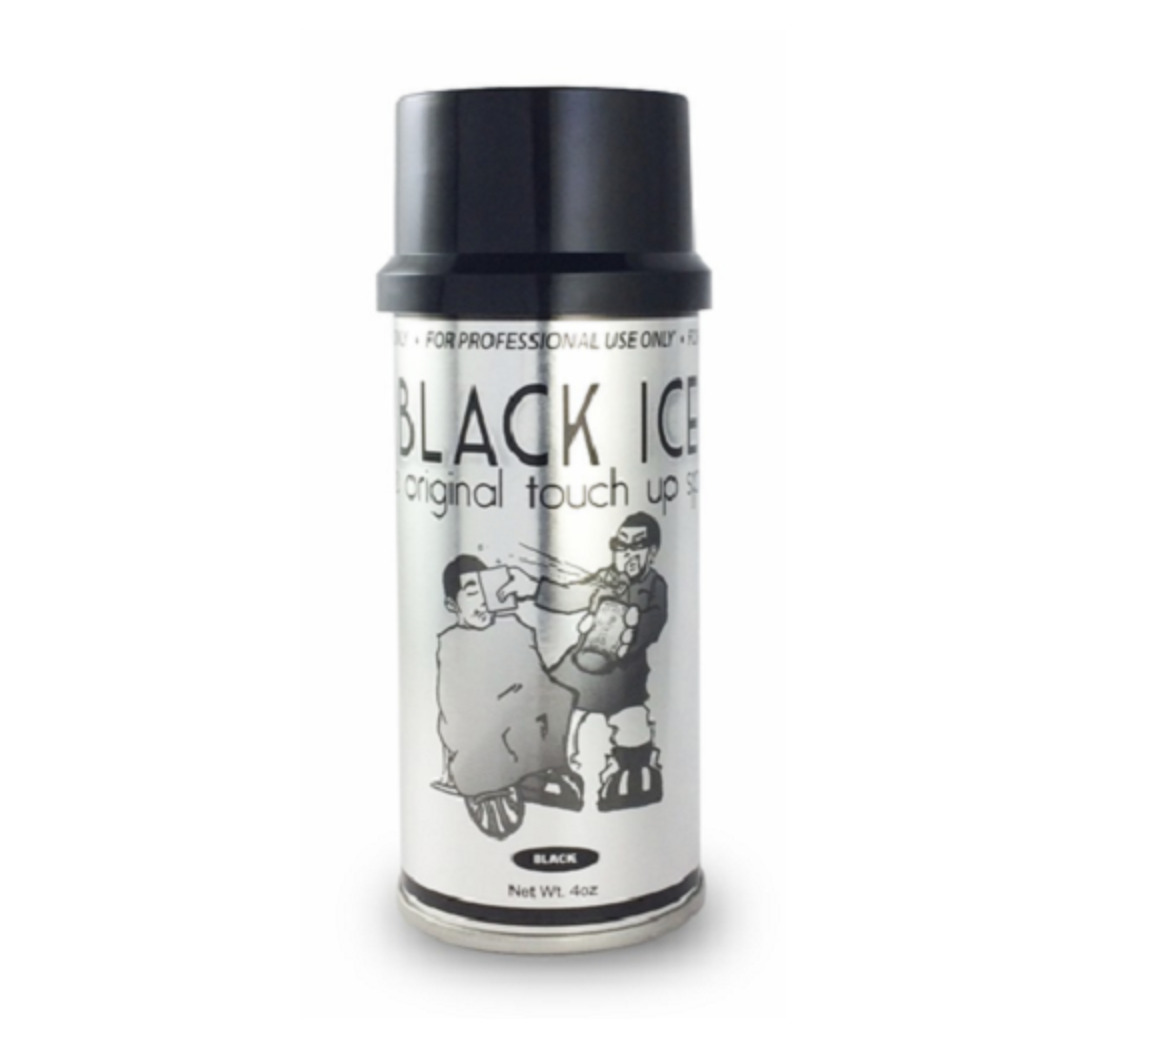 BLACK ICE Original Touch Up Spray Black 4oz